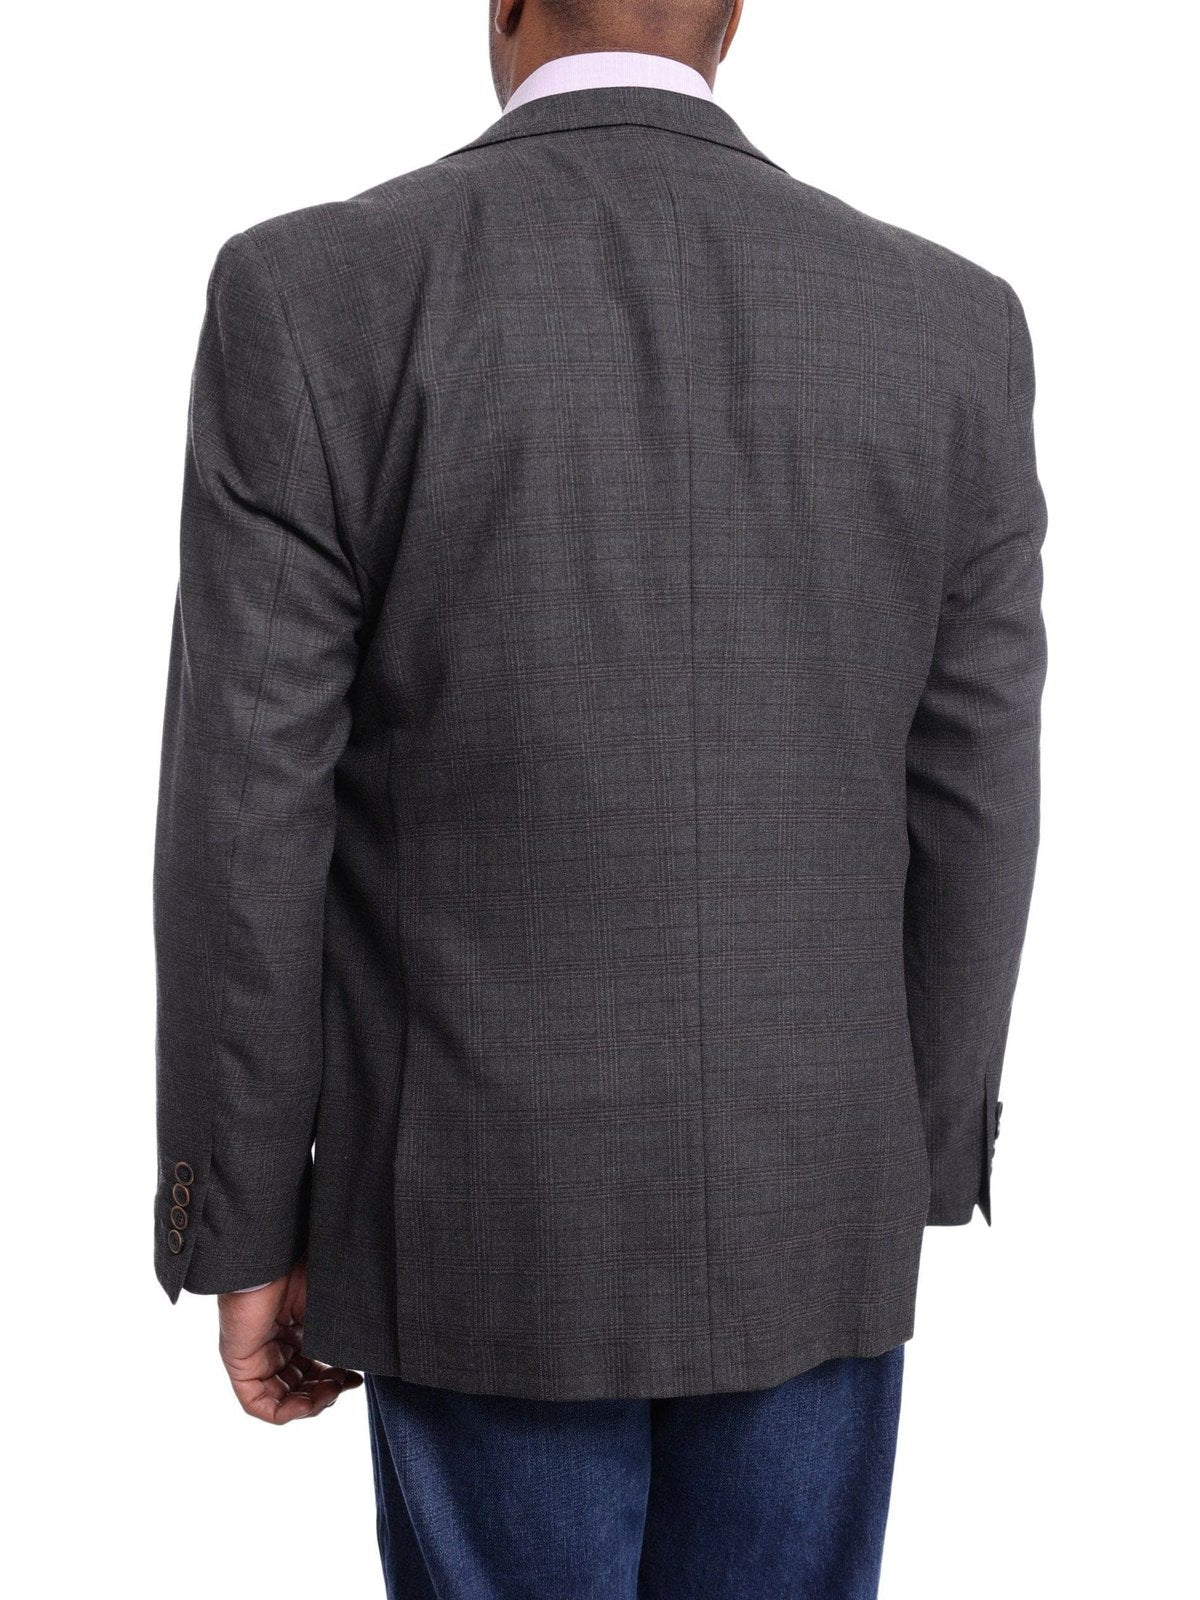 Arthur Black BLAZERS Arthur Black Classic Fit Gray With Brown Plaid Two Button Wool Blazer Sportcoat